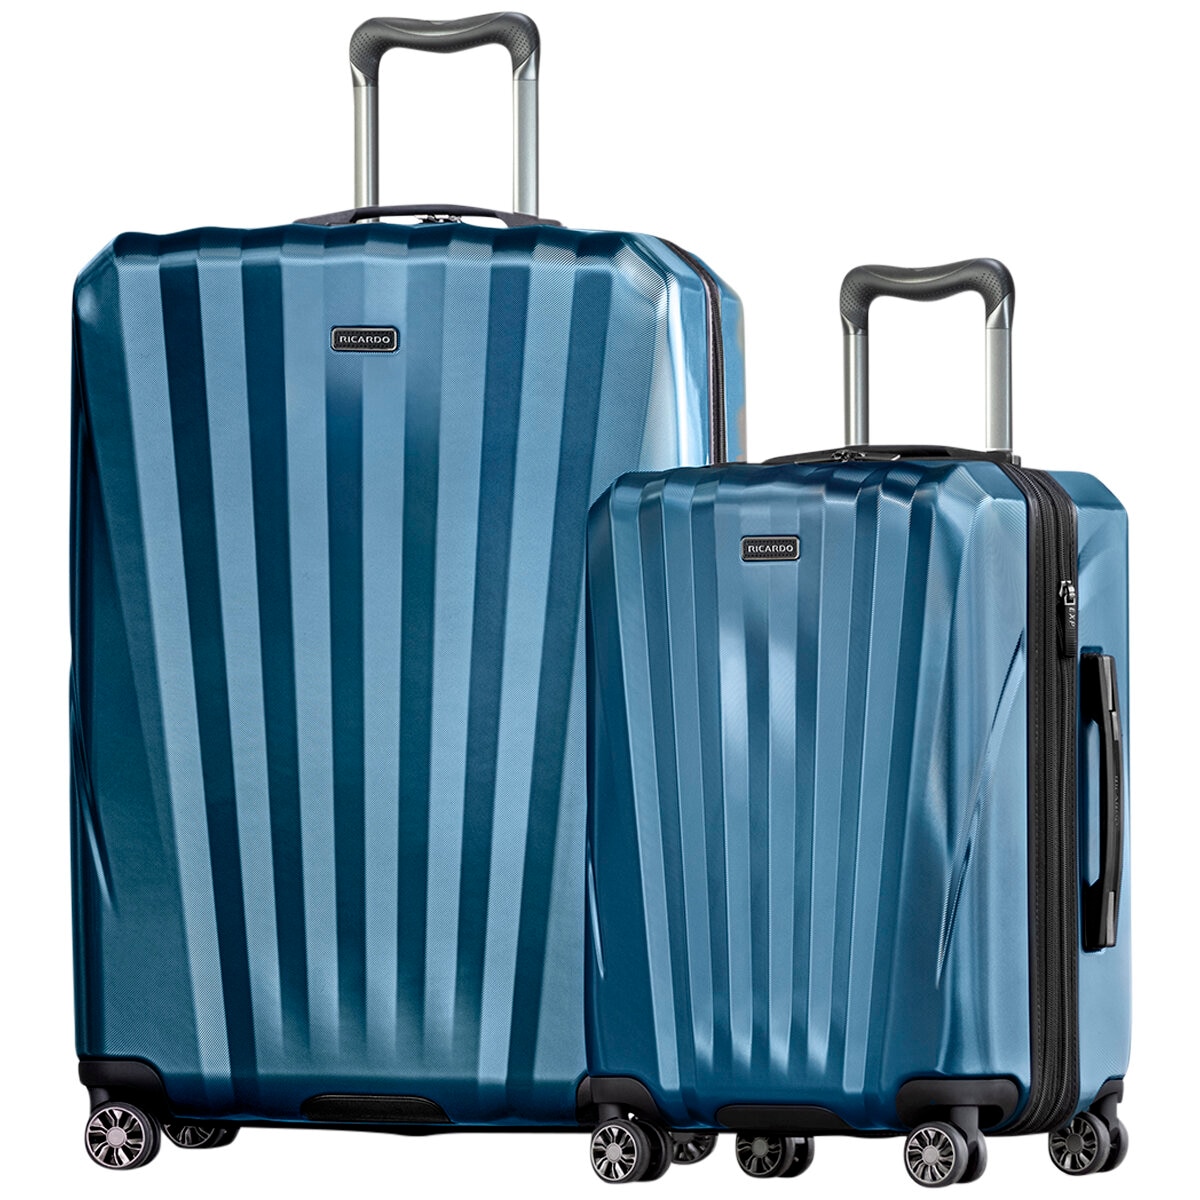 ricardo luggage set